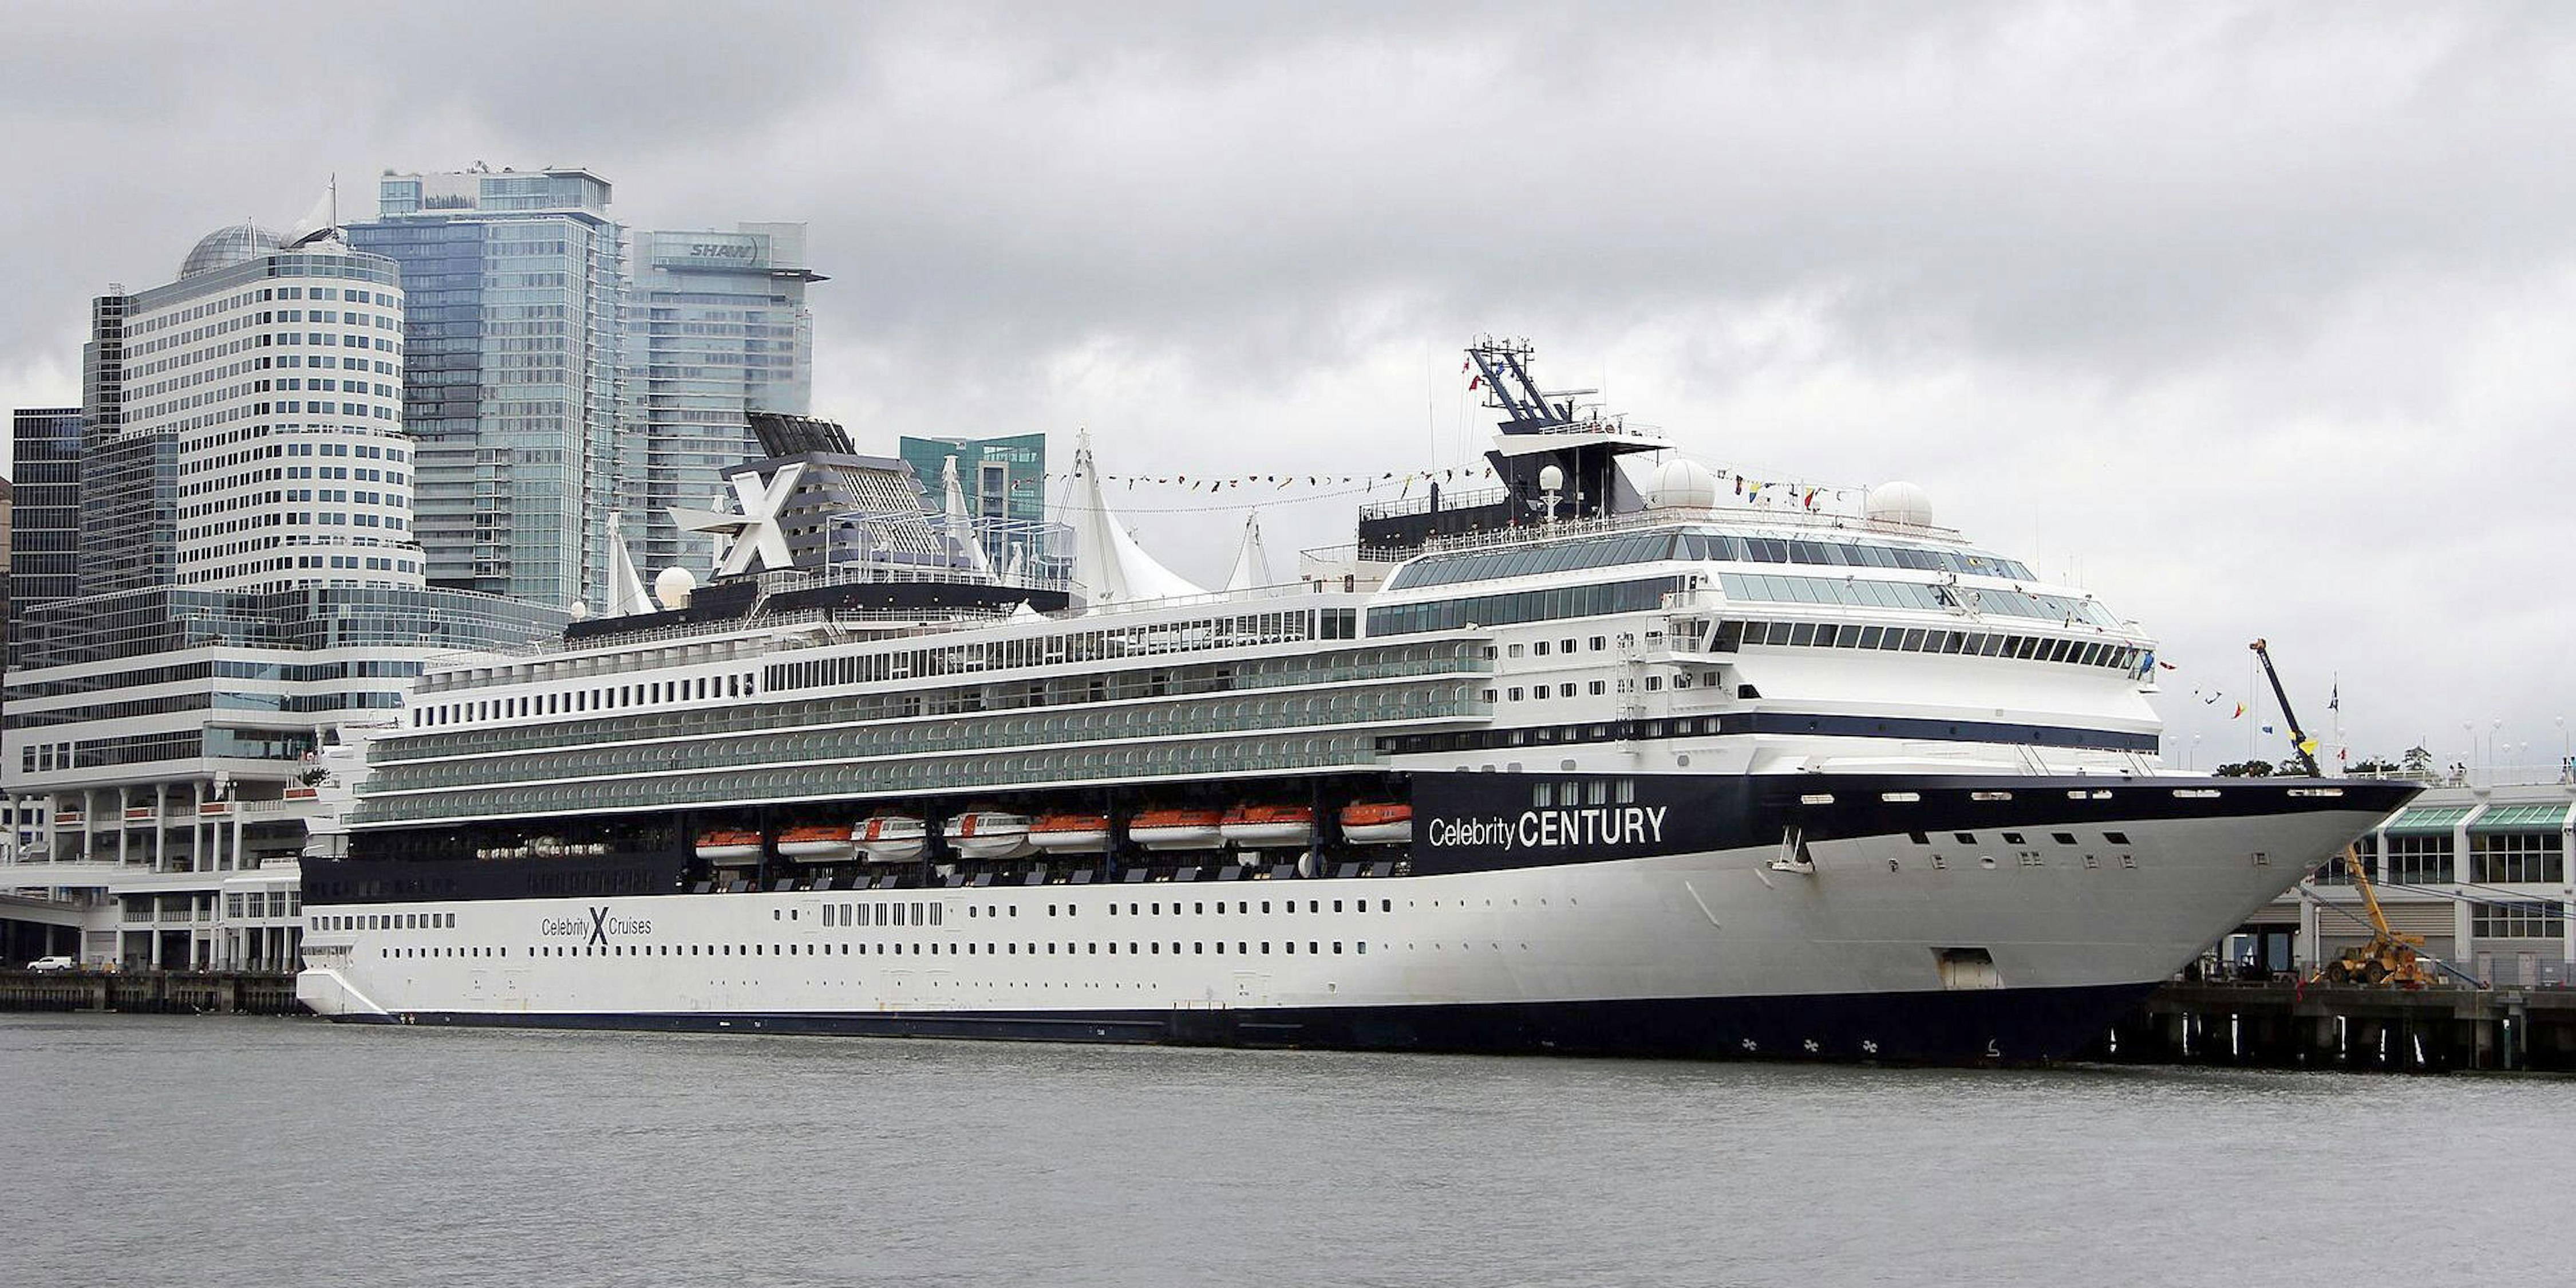 celebrity cruises vs royal caribbean